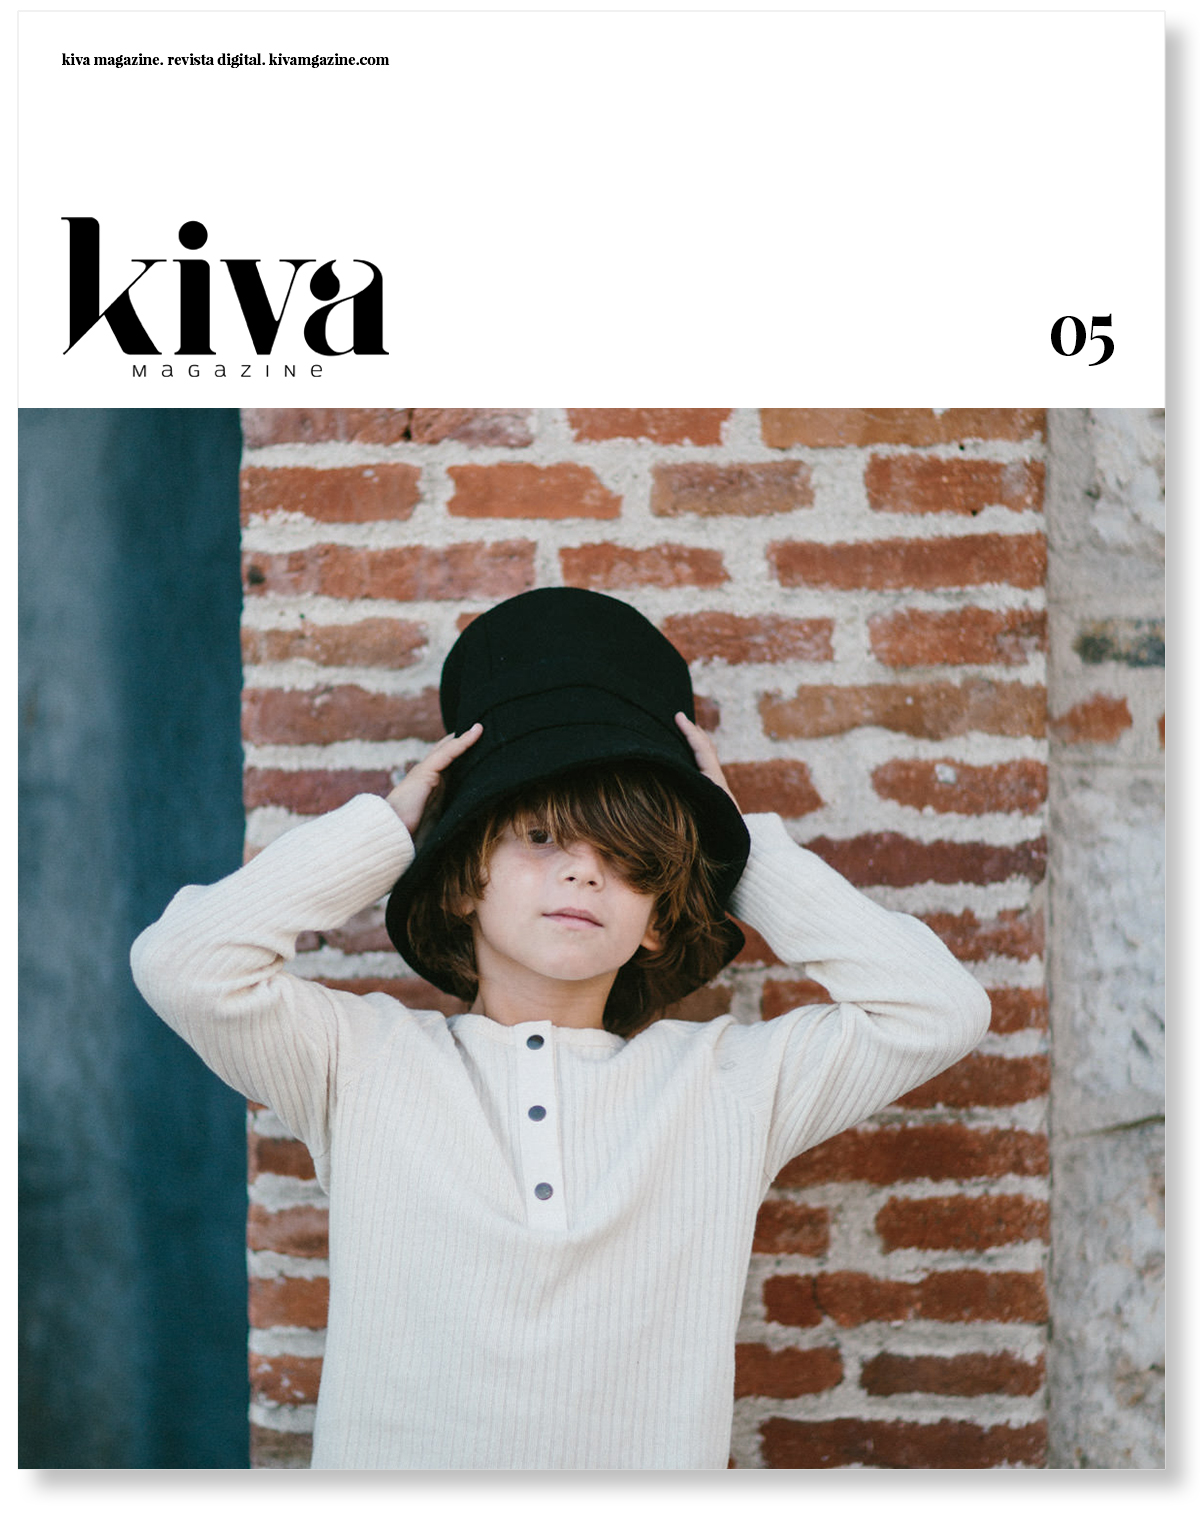 Quinto número Kiva magazine